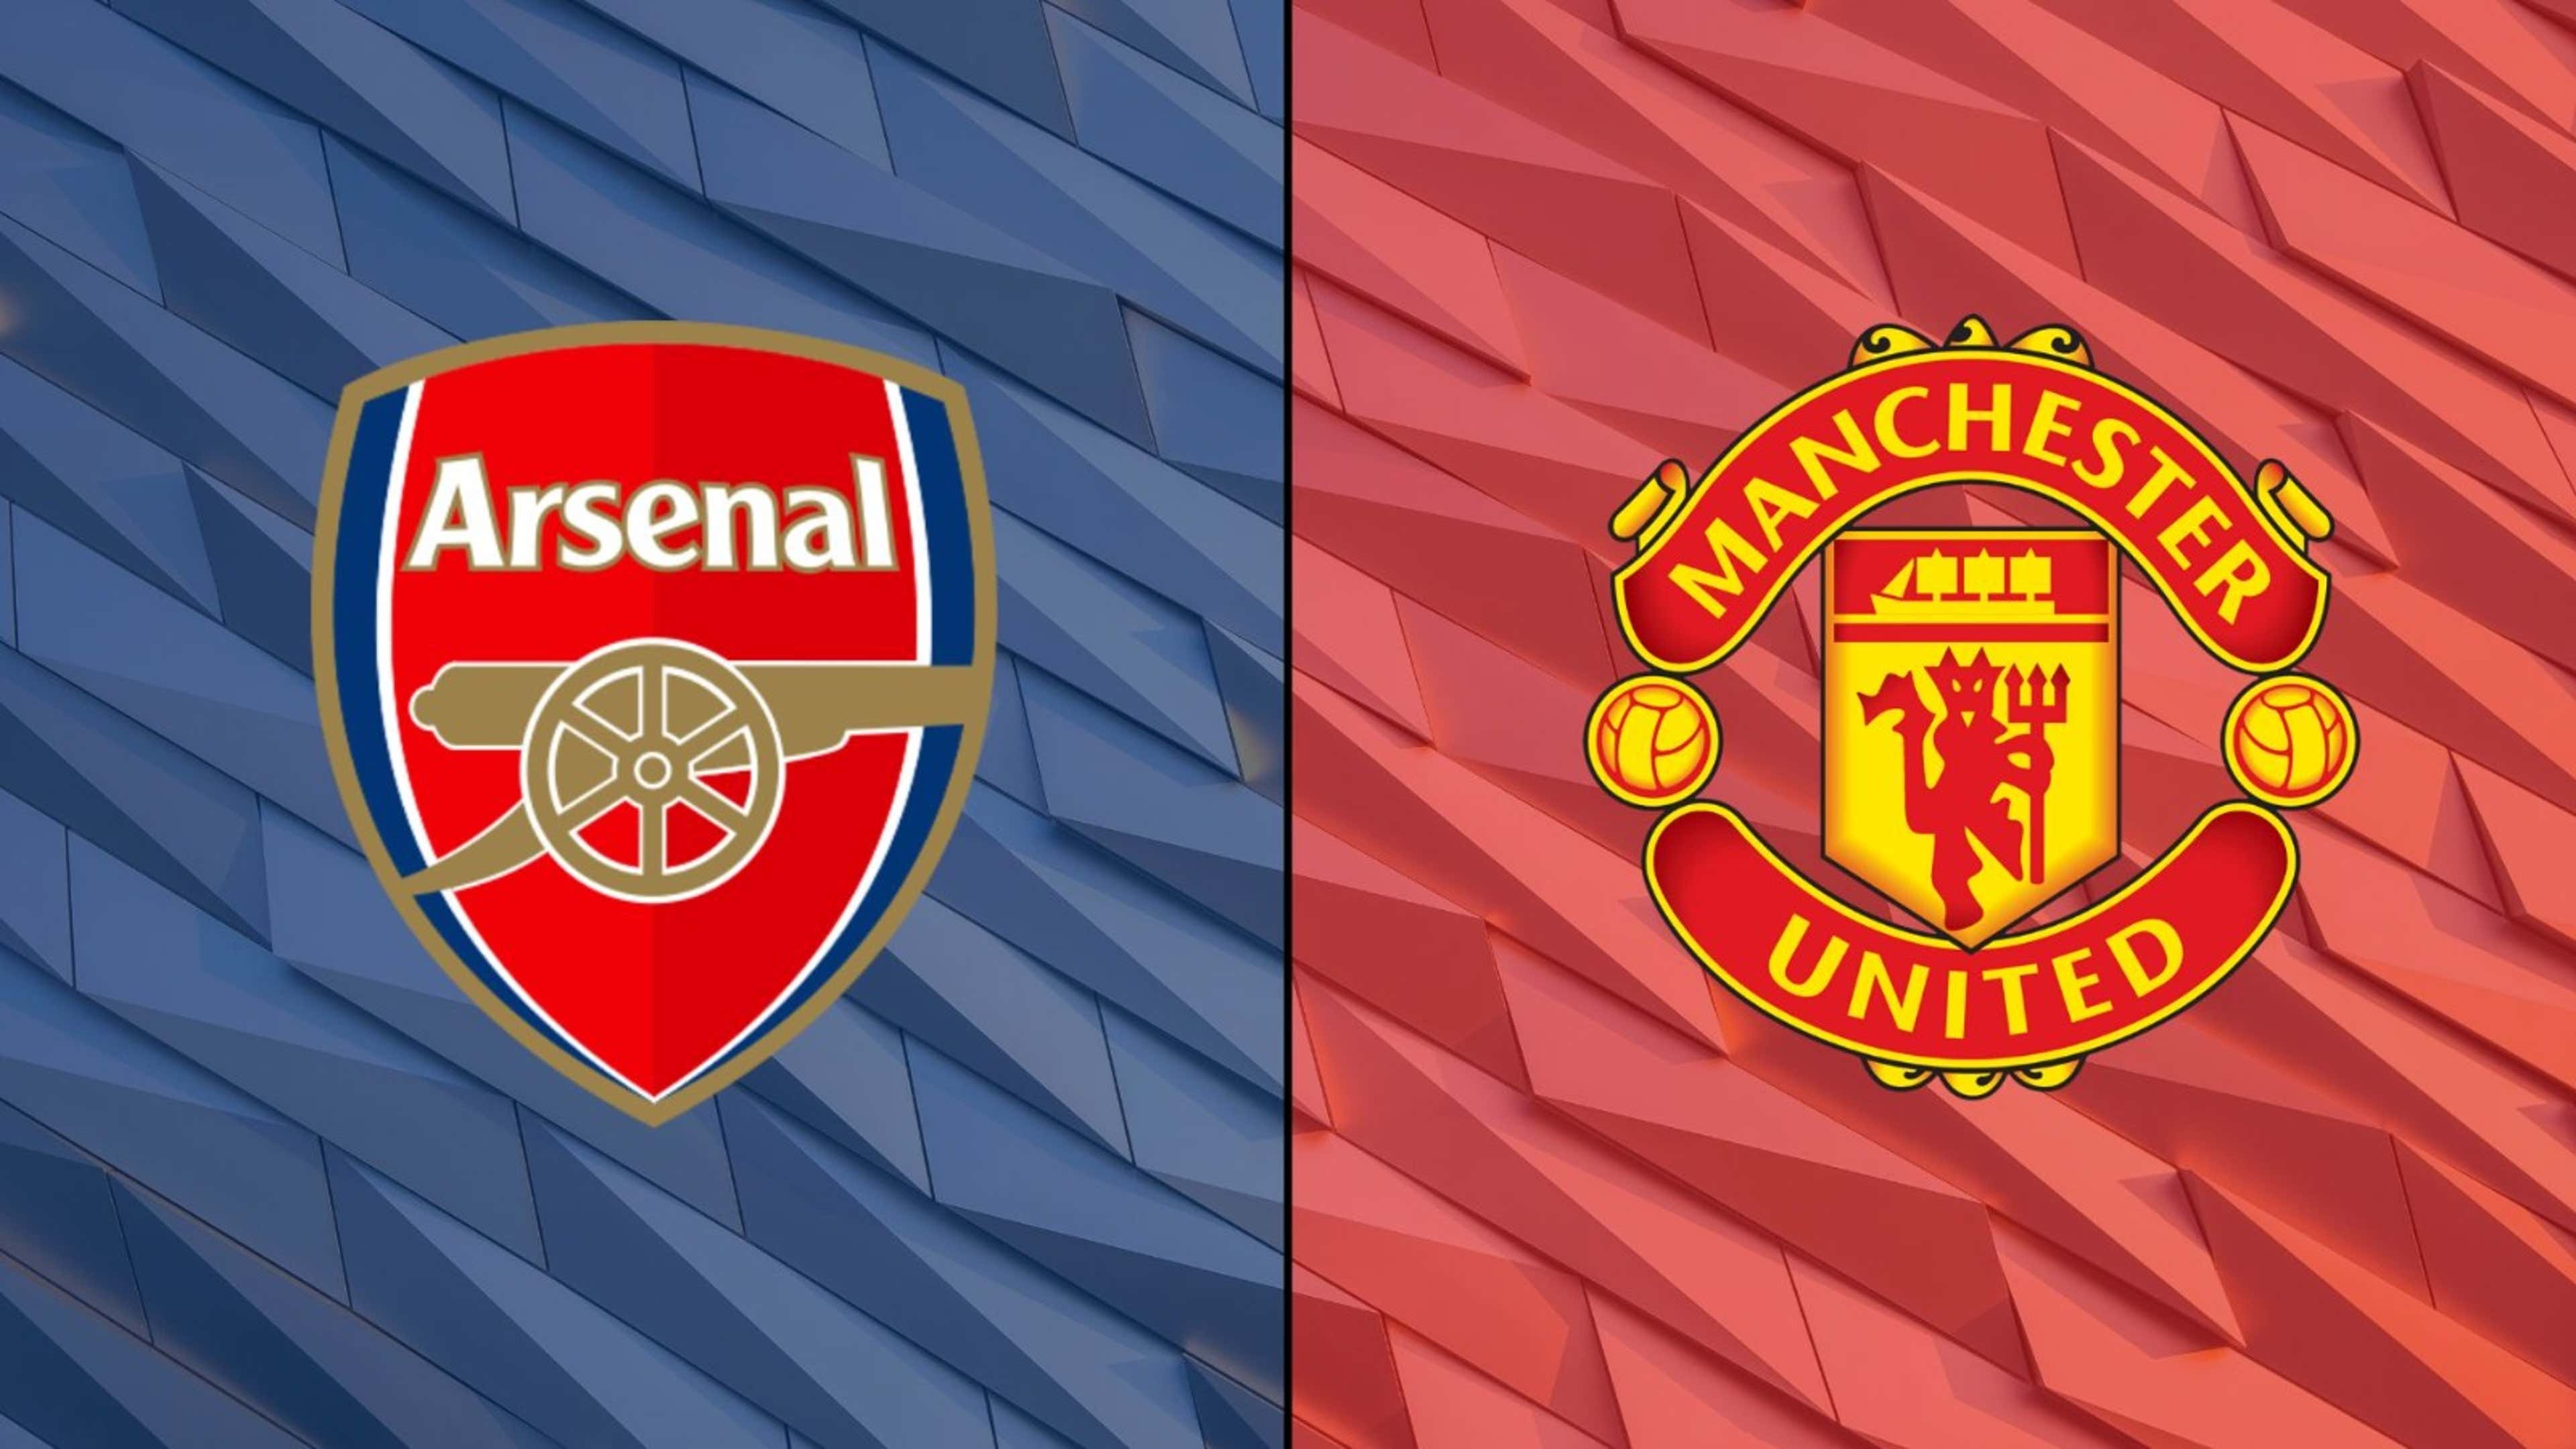 Arsenal v manchester united